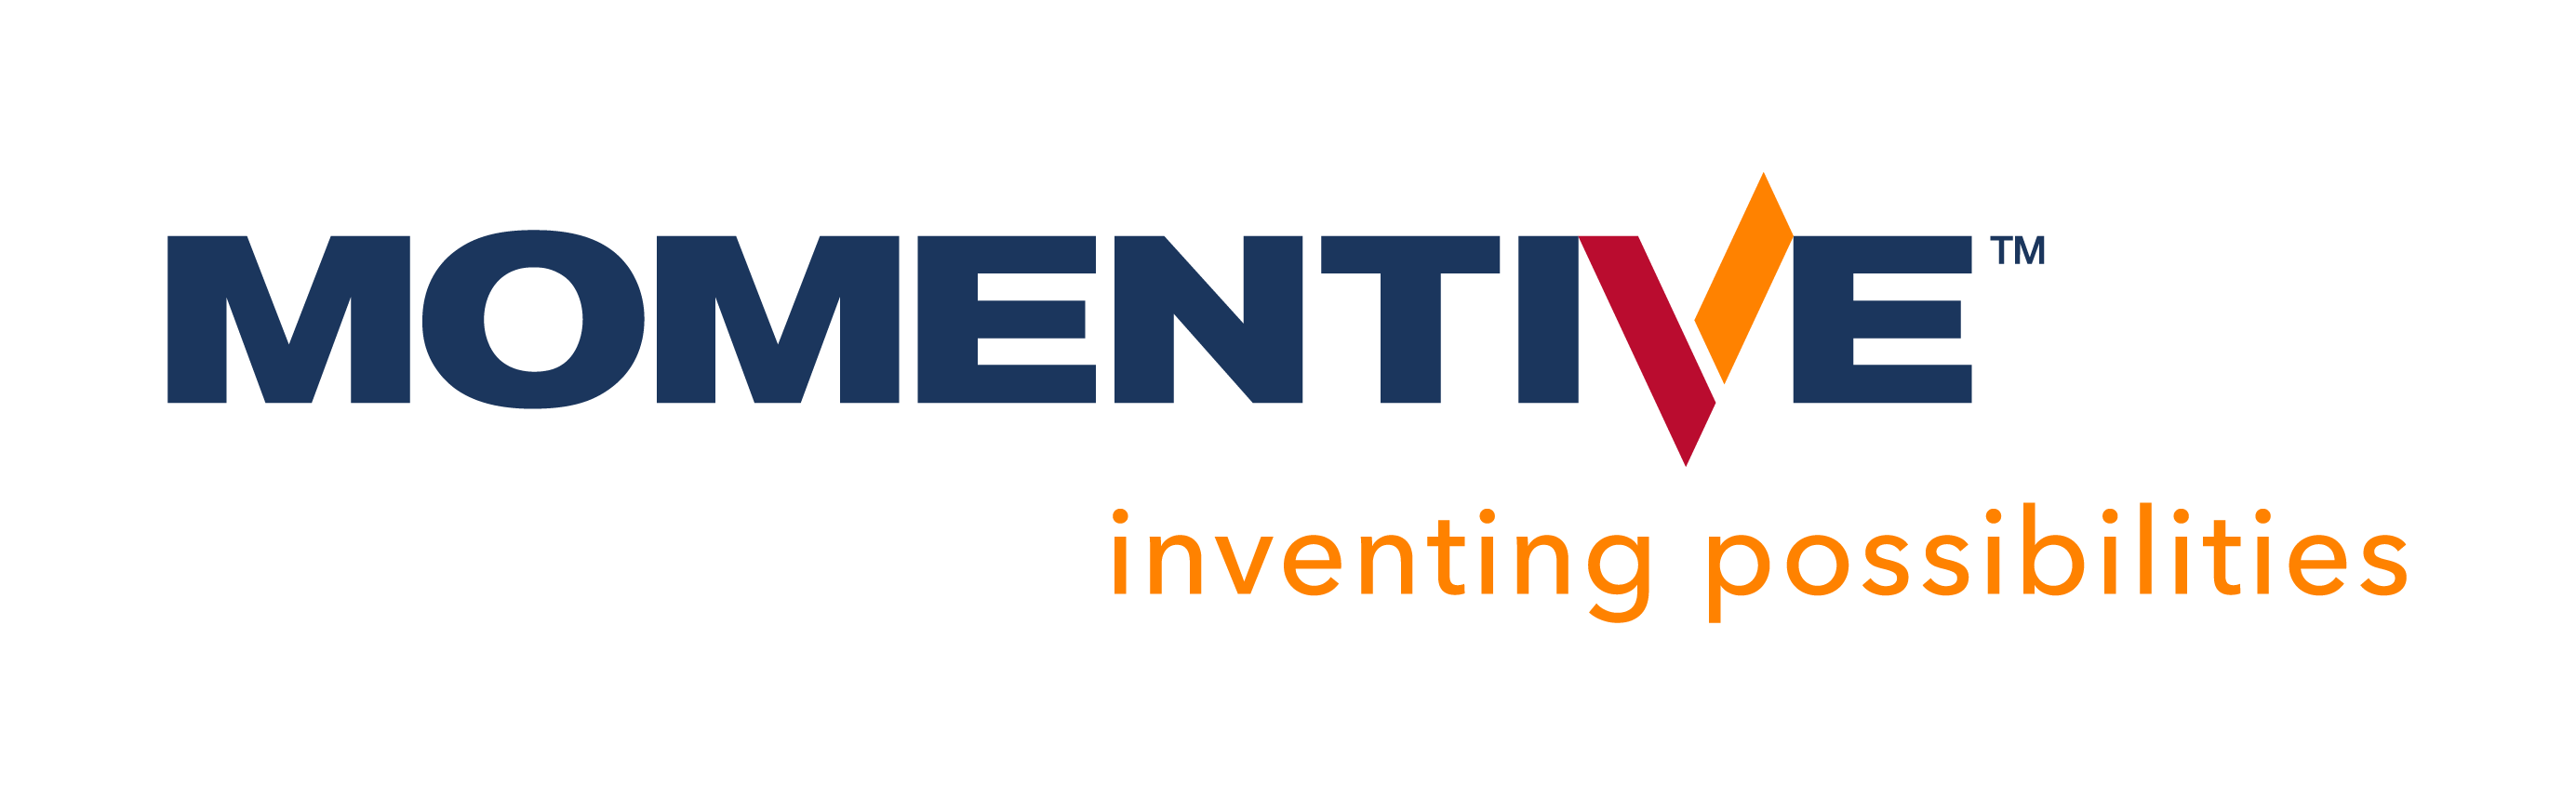 Momentive Logo - Momentive Performance Materials logo.png